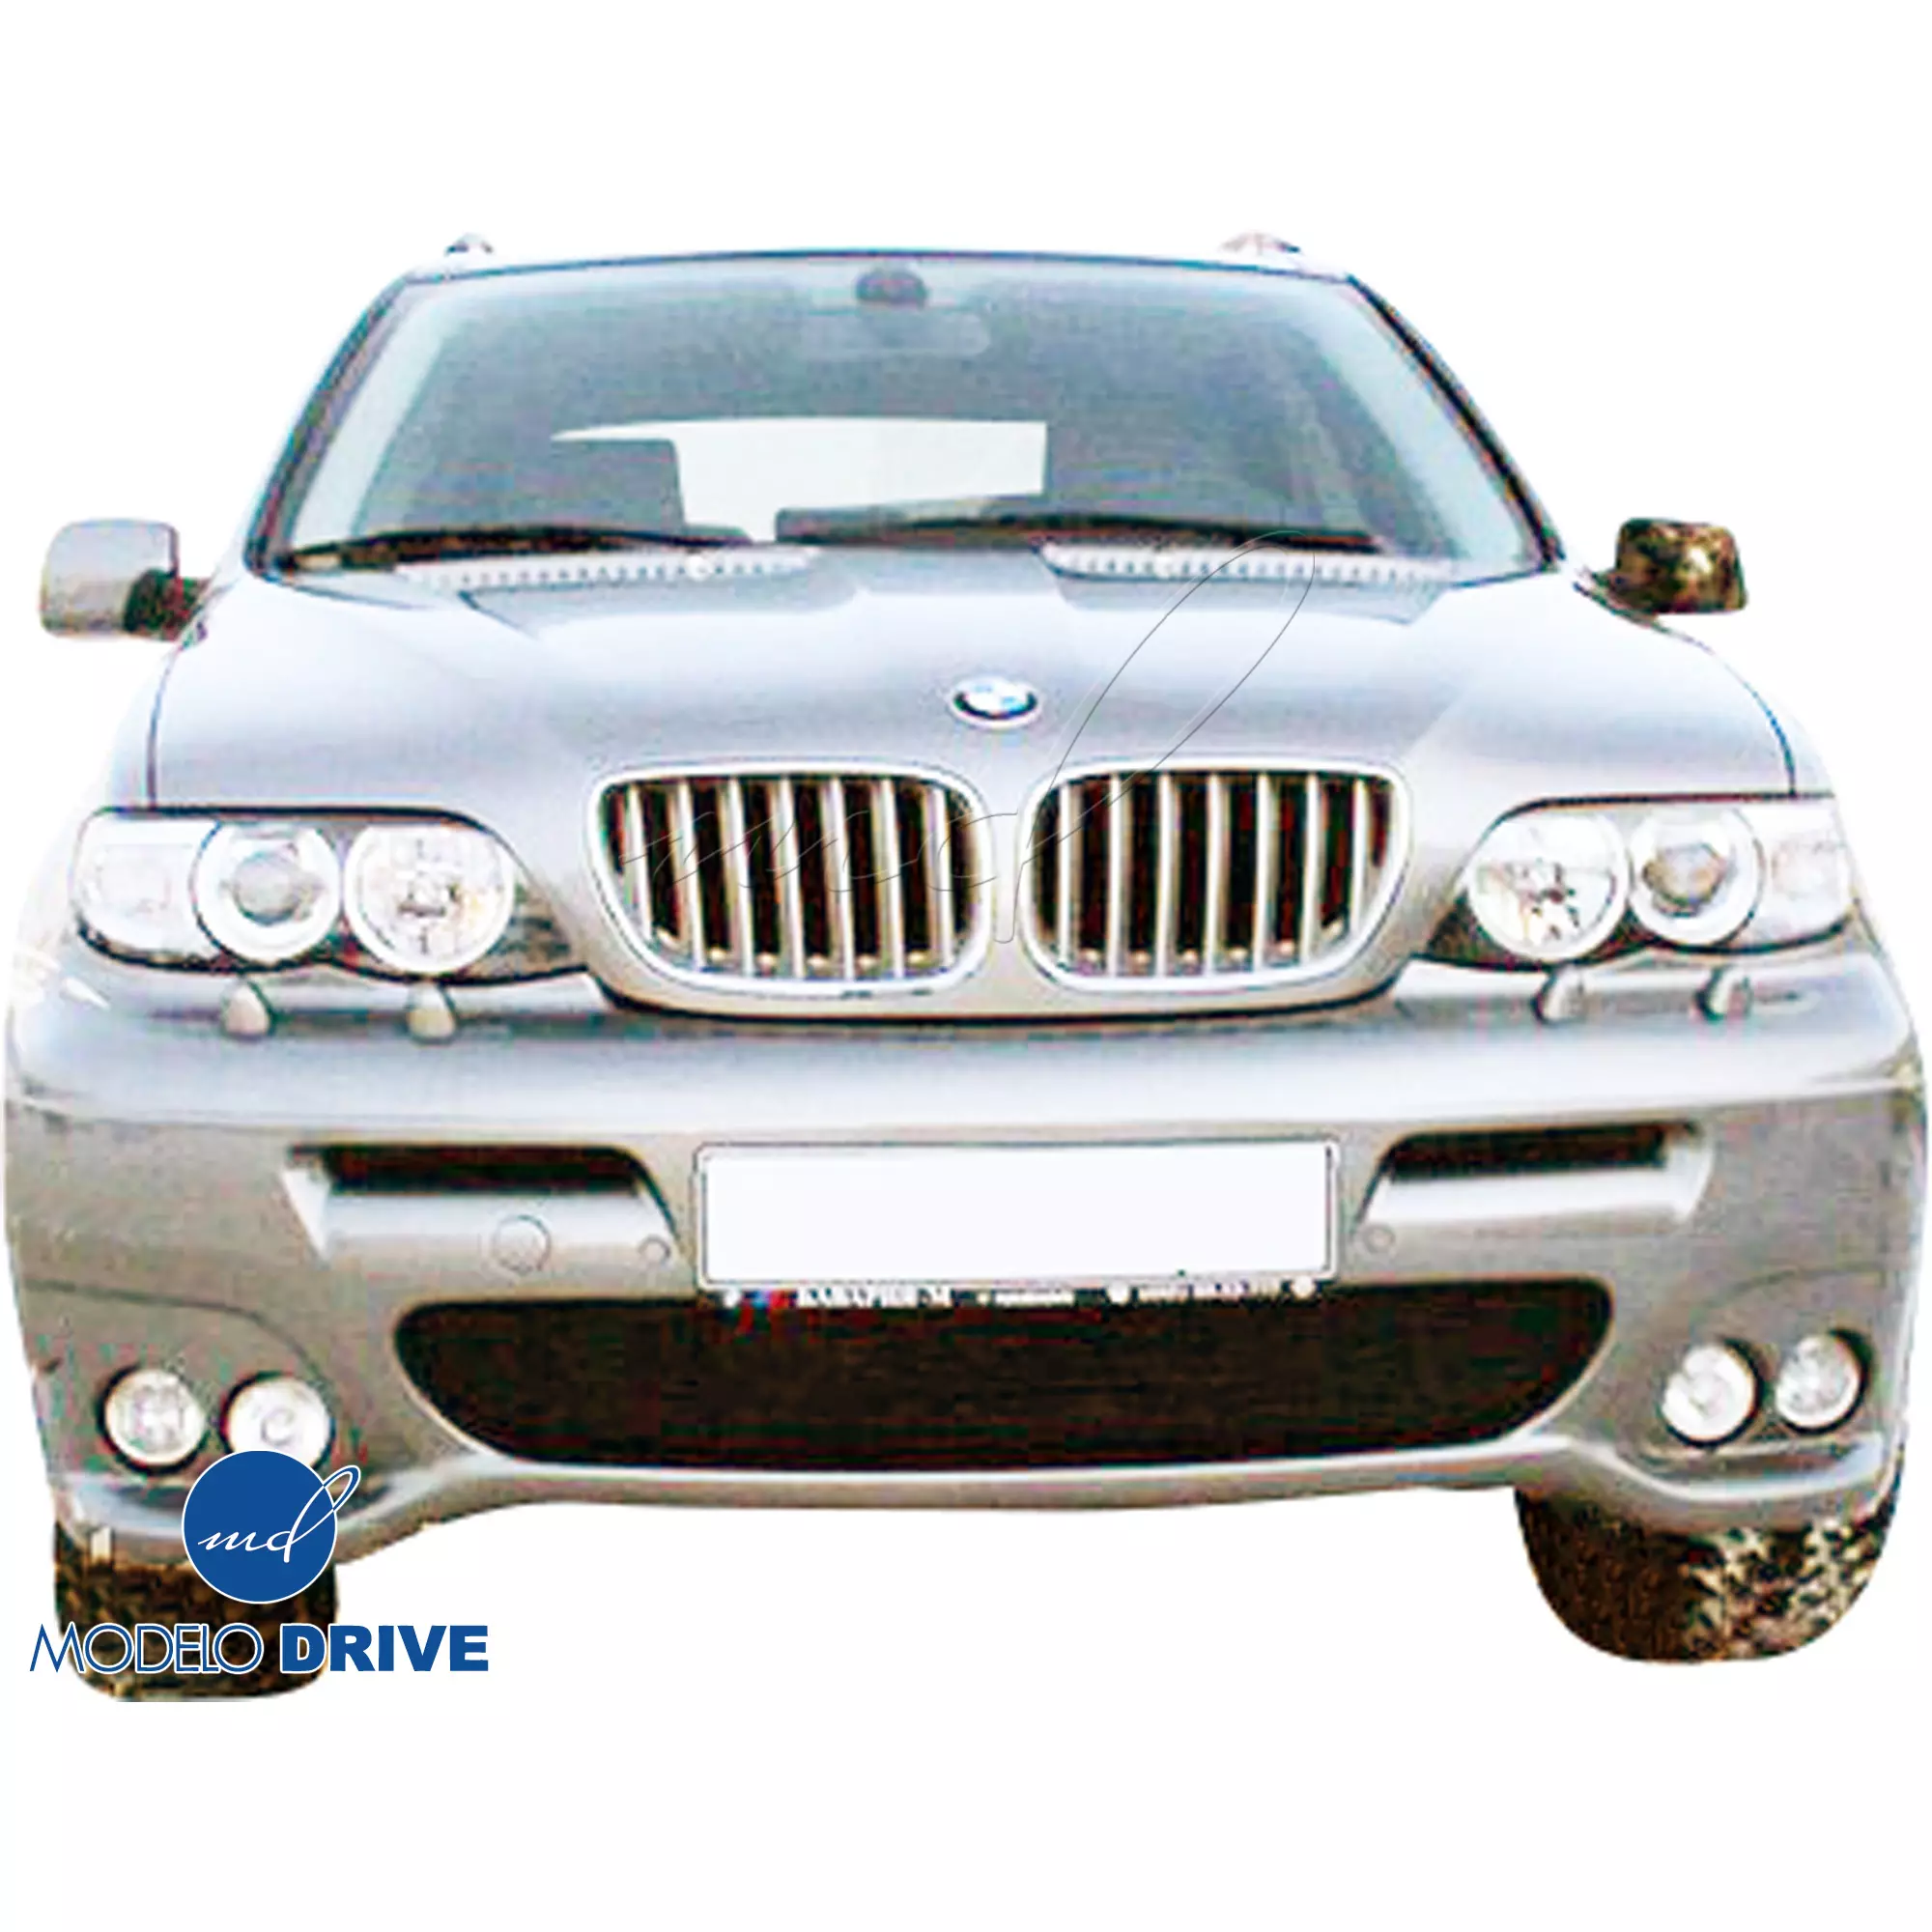 ModeloDrive FRP HAMA Body Kit 3pc > BMW X5 E53 2000-2006 > 5dr - Image 5